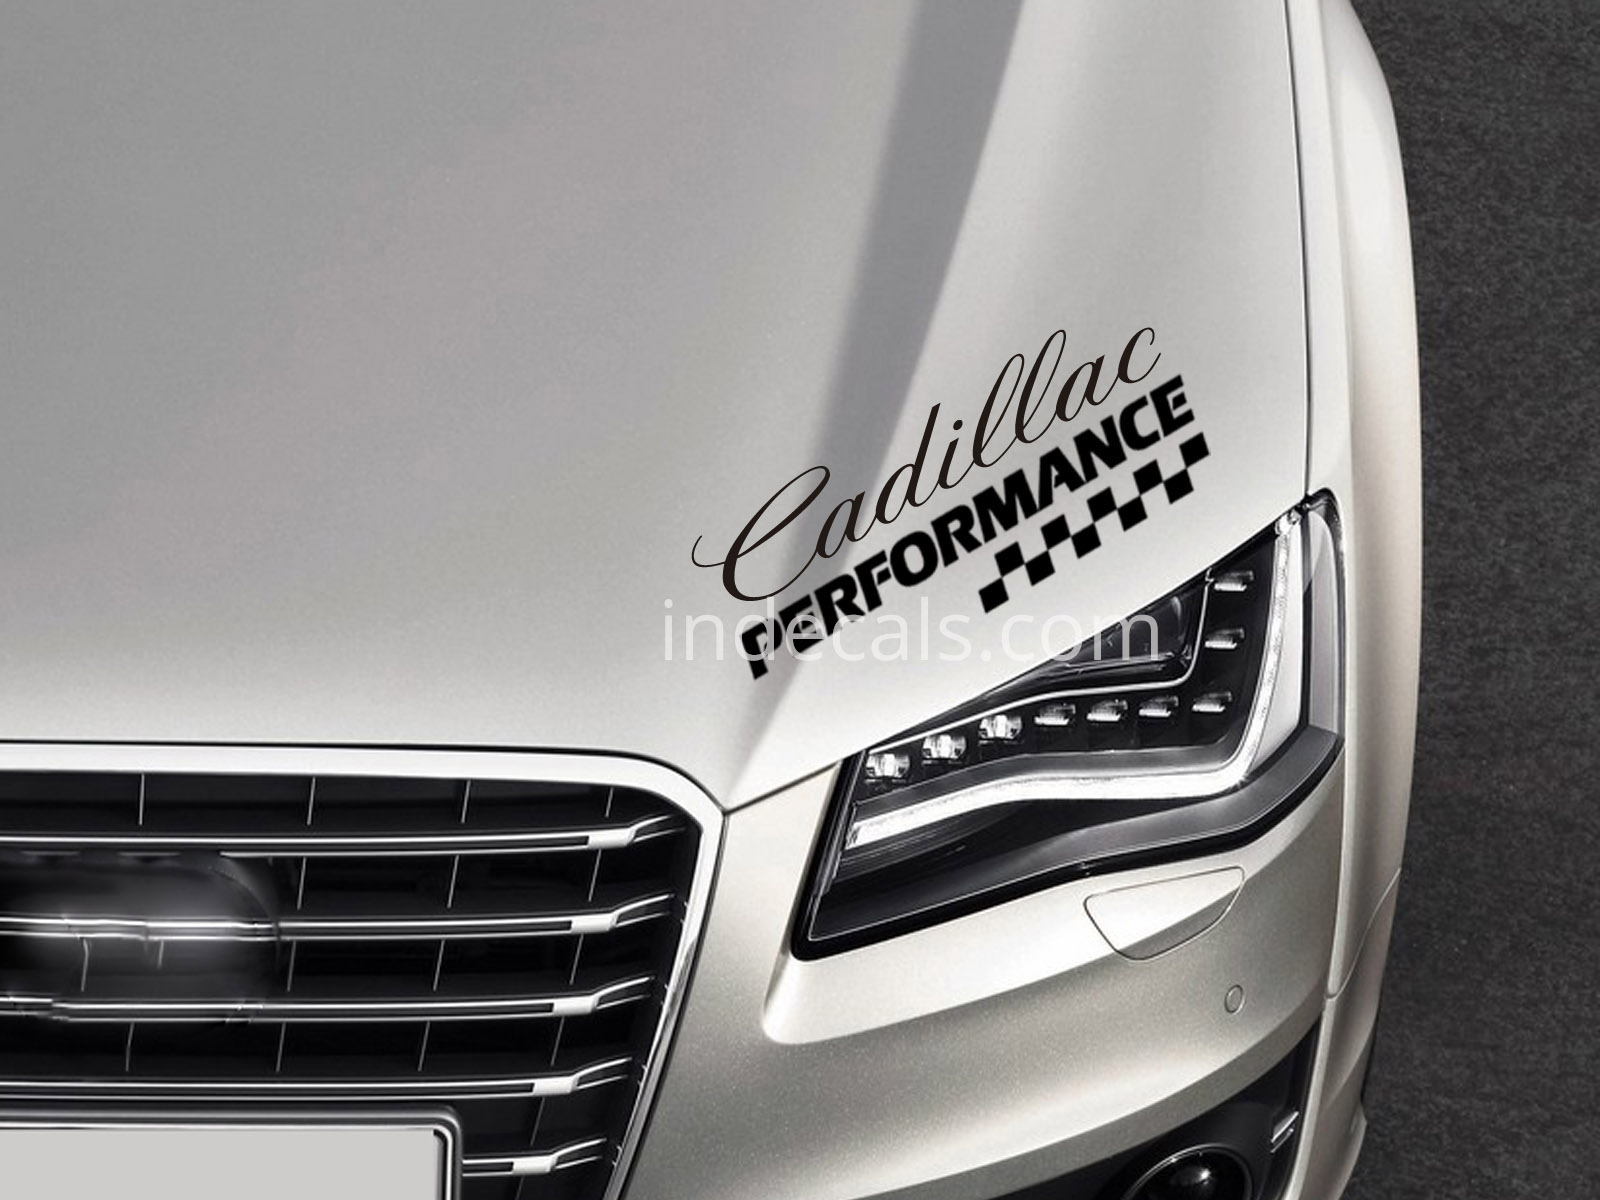 1 x Cadillac Performance Sticker - Black